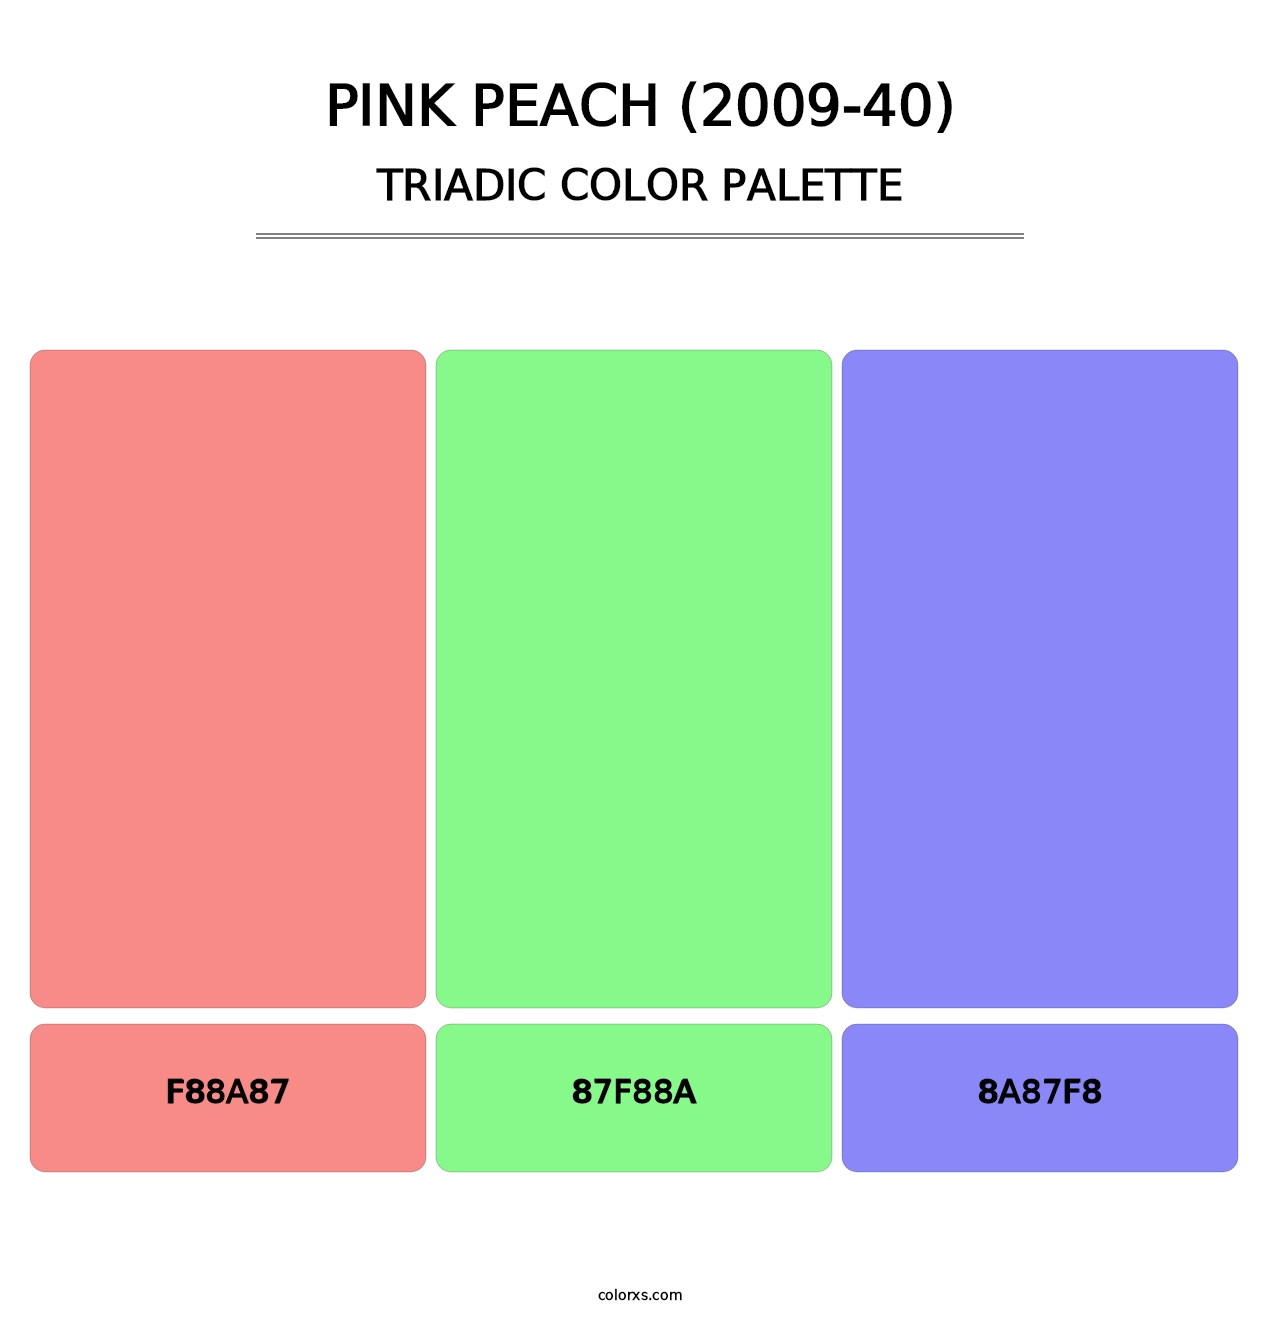 Pink Peach (2009-40) - Triadic Color Palette